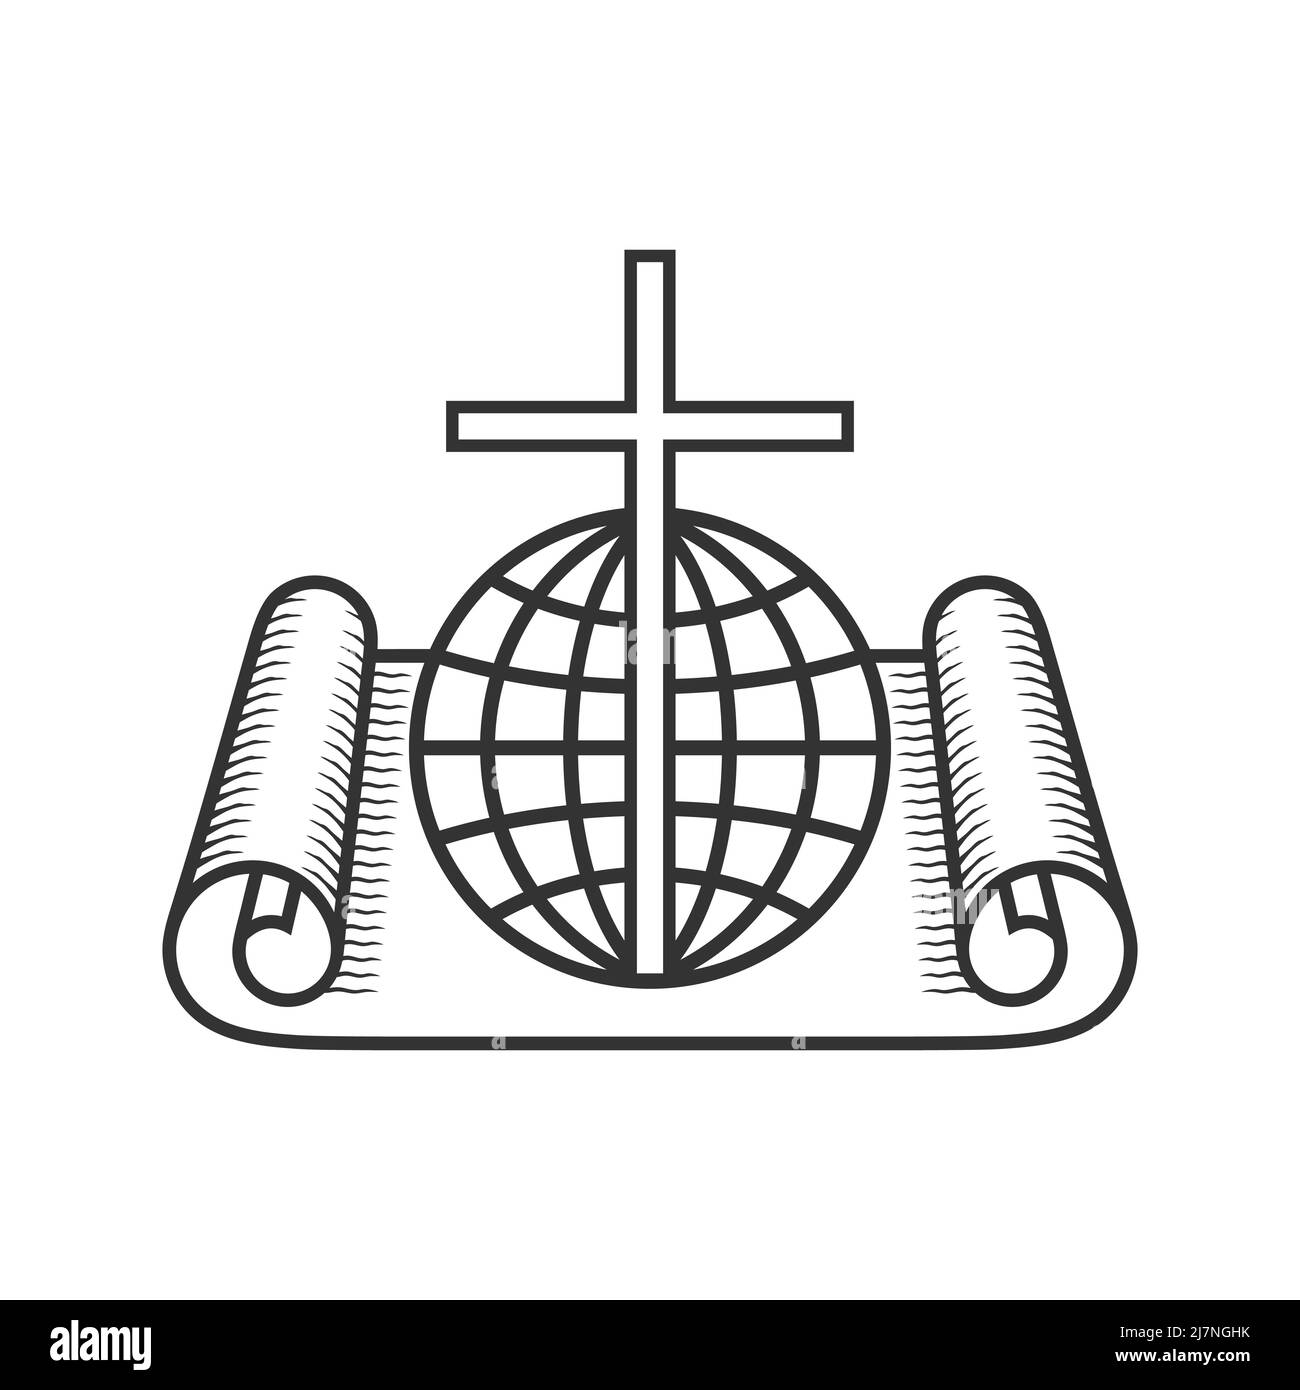 Christian illustration. Church logo. Scroll of Scripture, cross and globe. Stock Vector